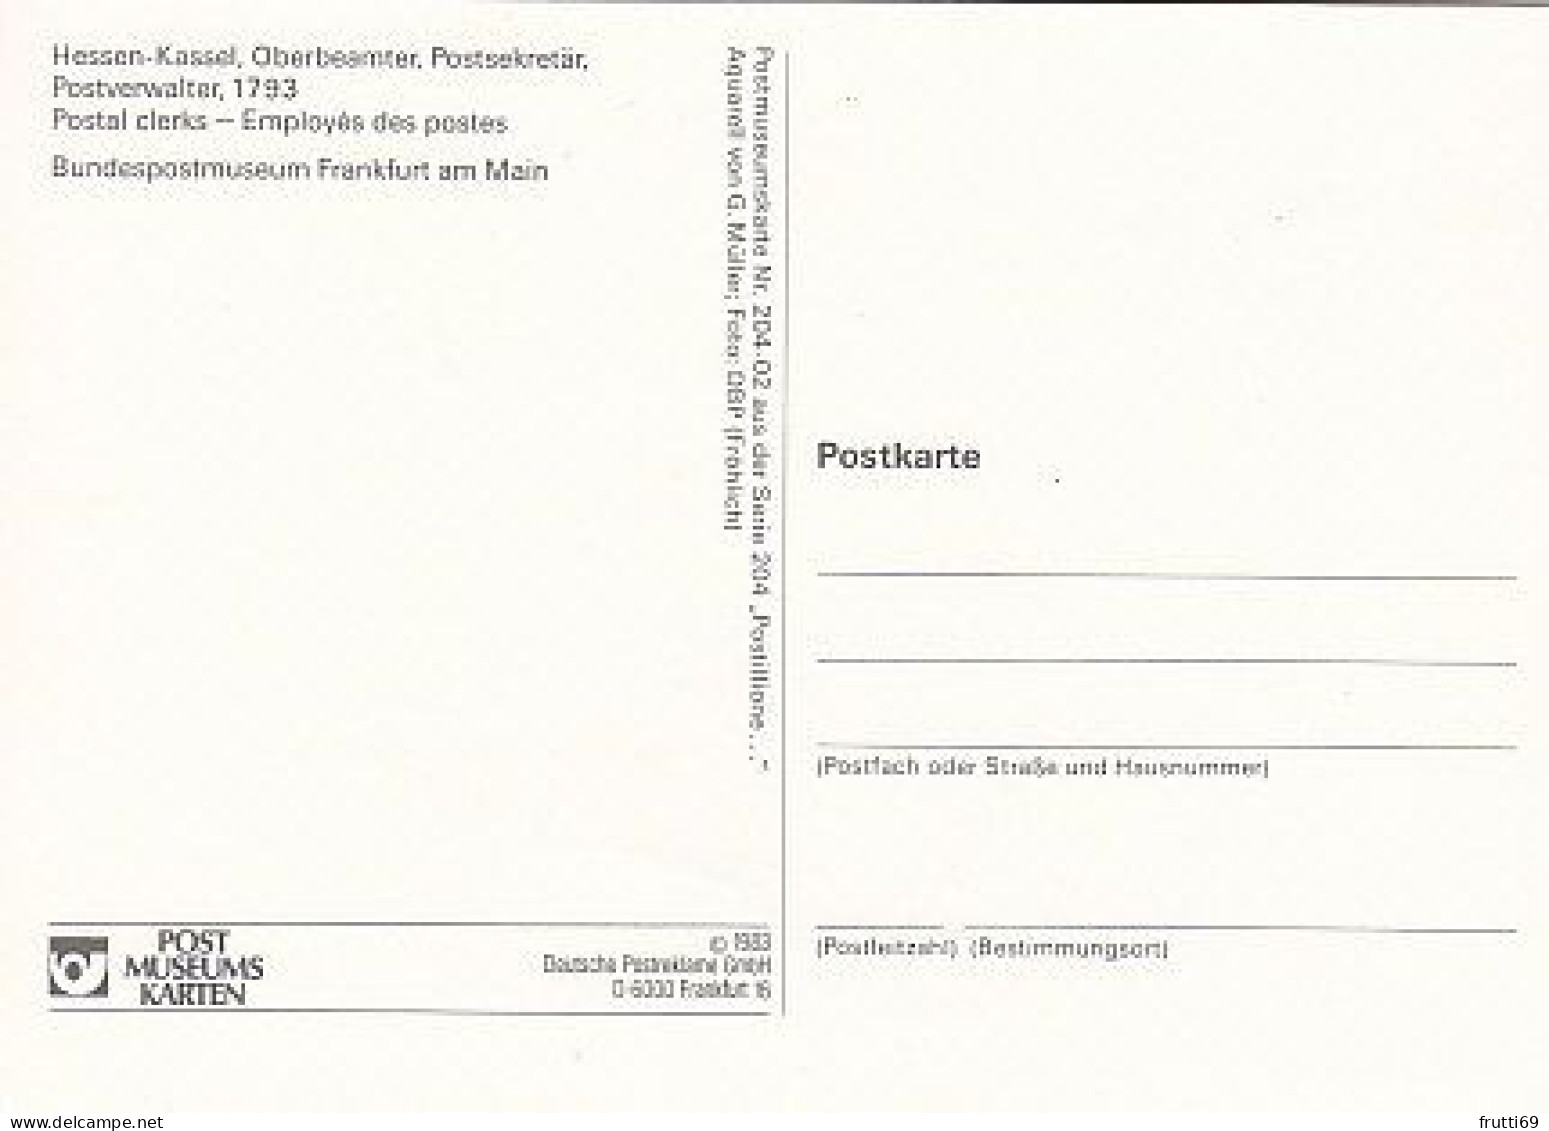 AK 216117 POST - Hessen-Kassel - Oberbeamter, Postsekretär, Postverwalter 1793 - Postal Services